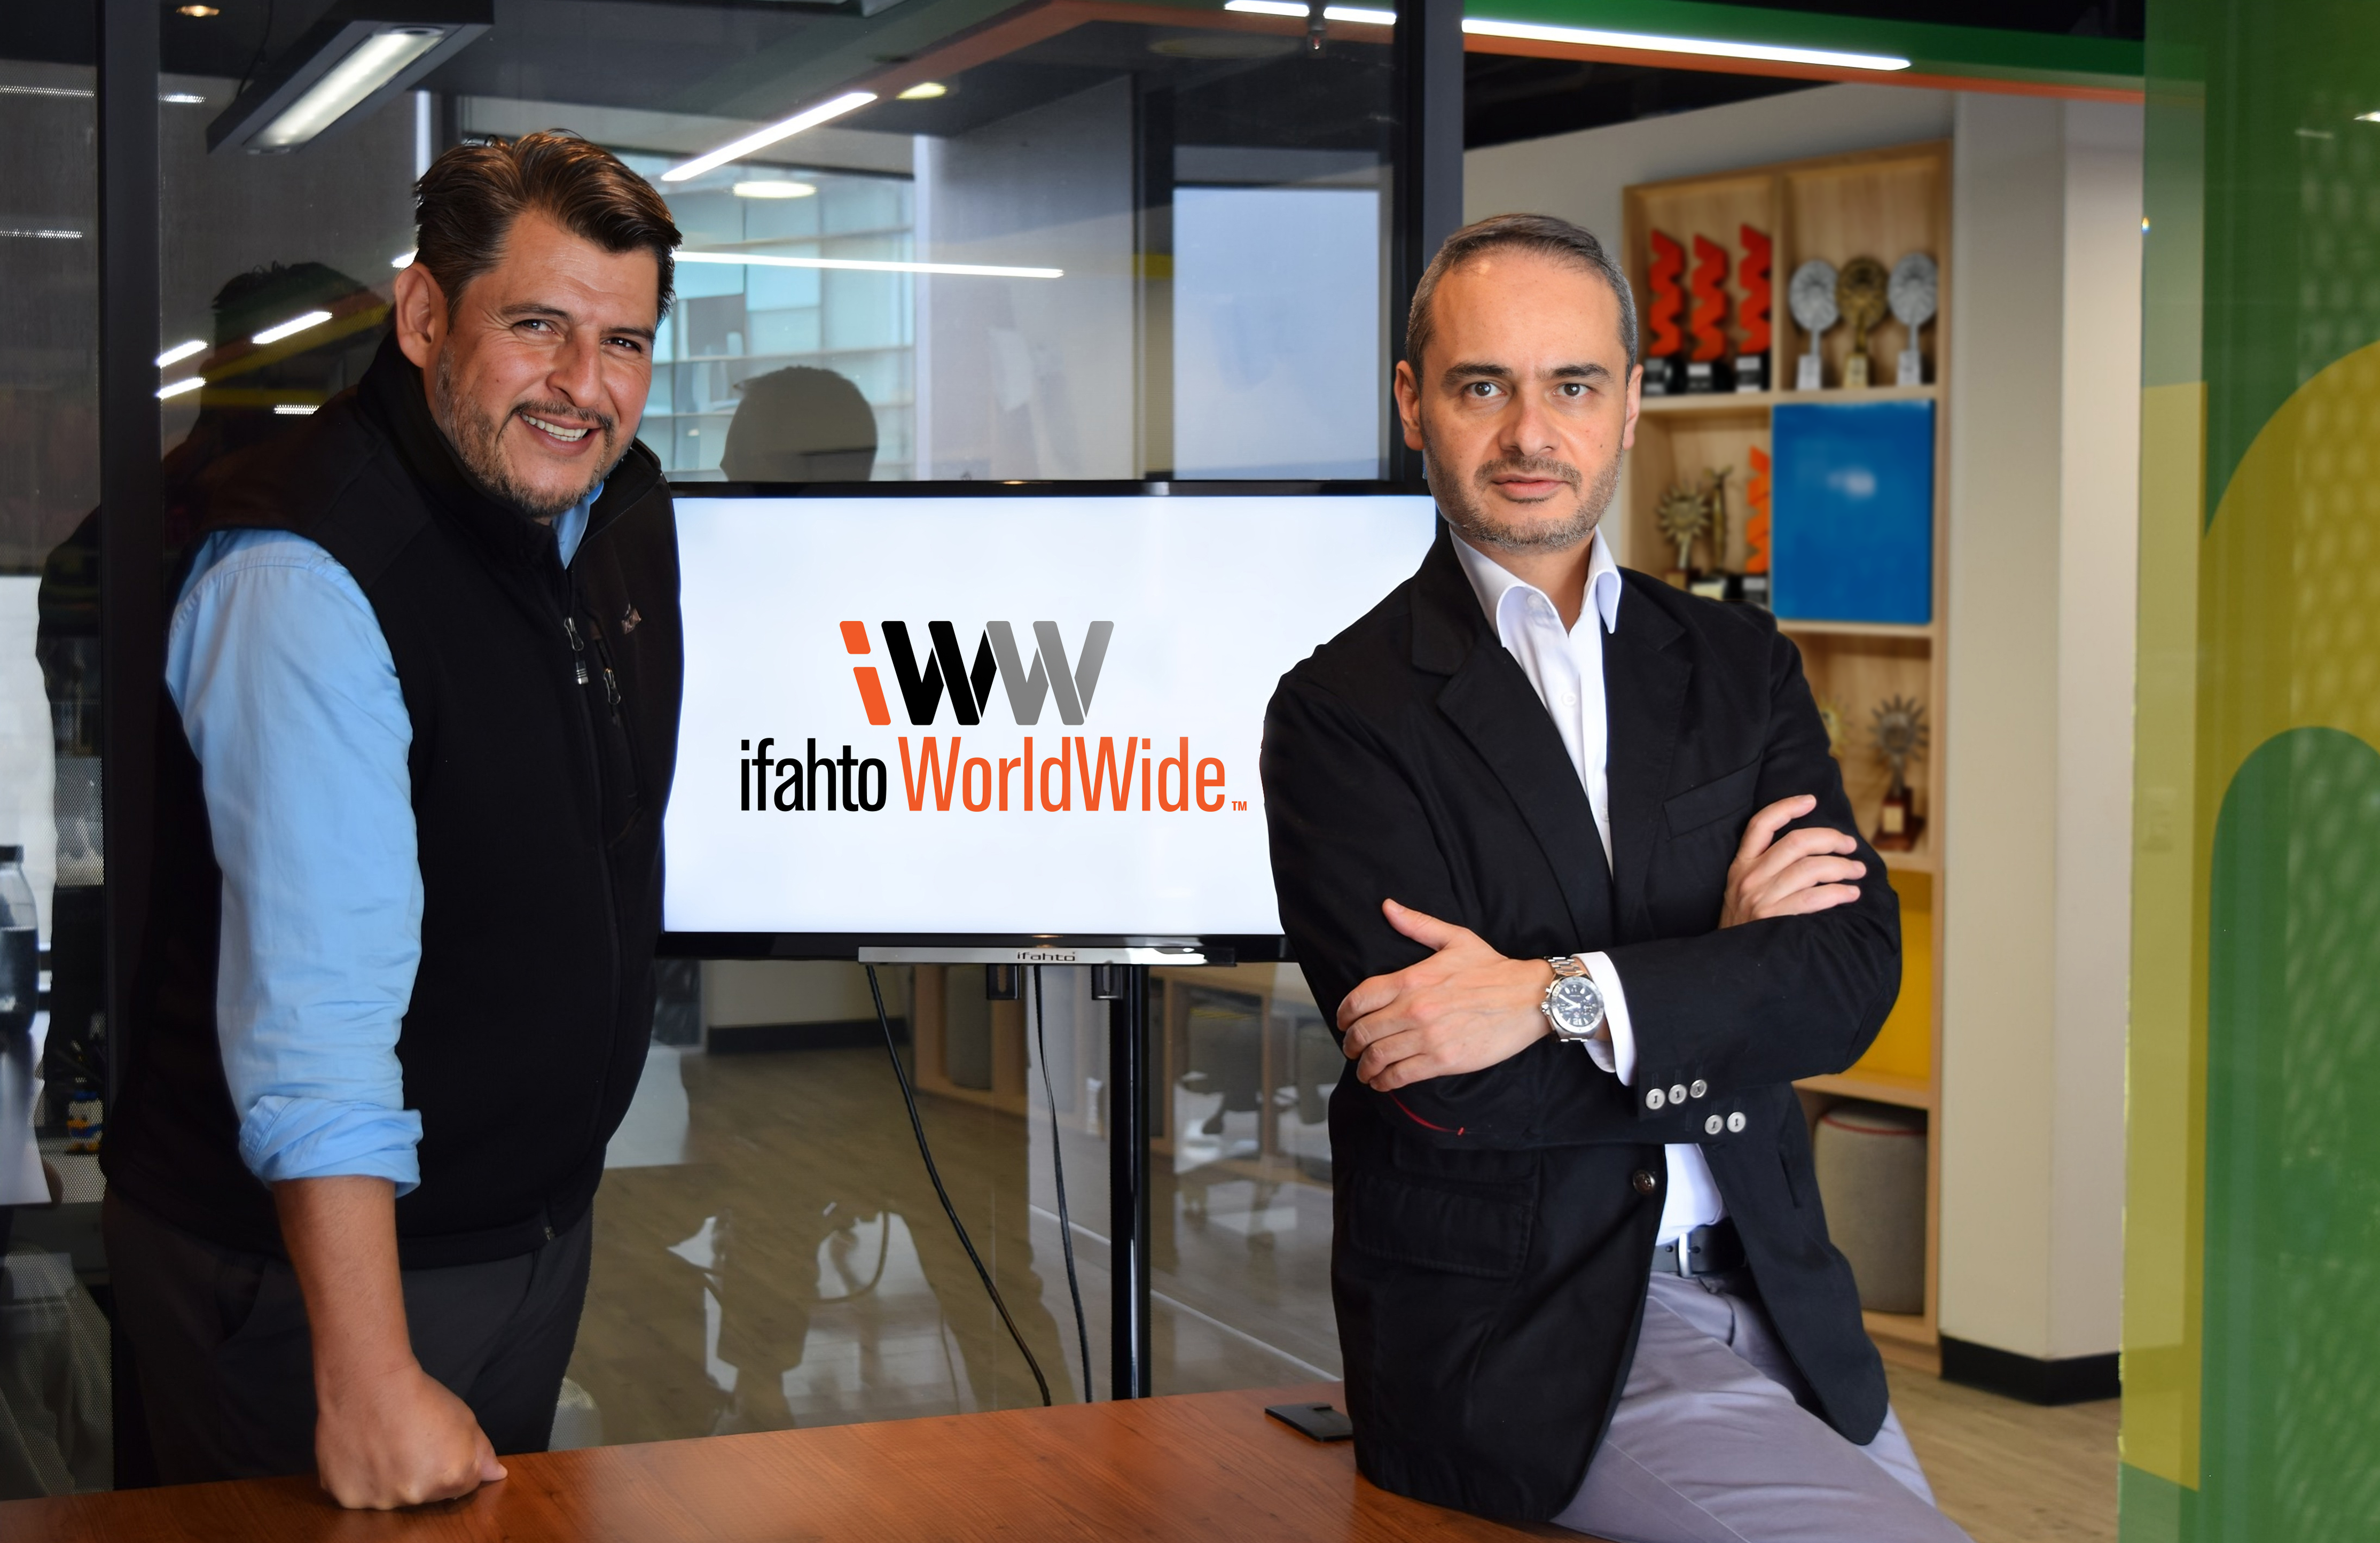 ifahto WorldWide con nuevo equipo directivo